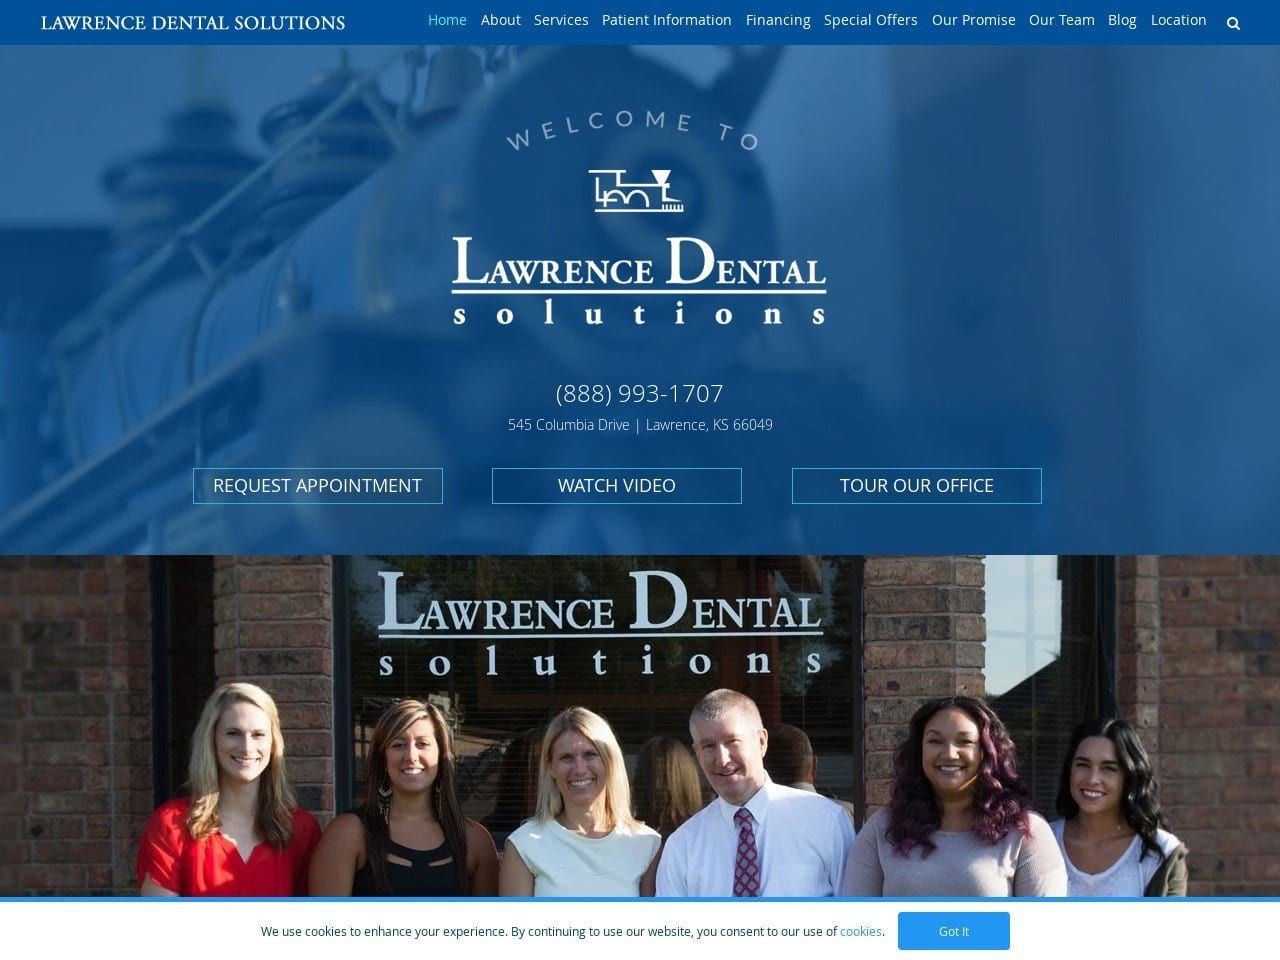 Lawrence Dental Solutions Website Screenshot from lawrencedentalsolutions.com